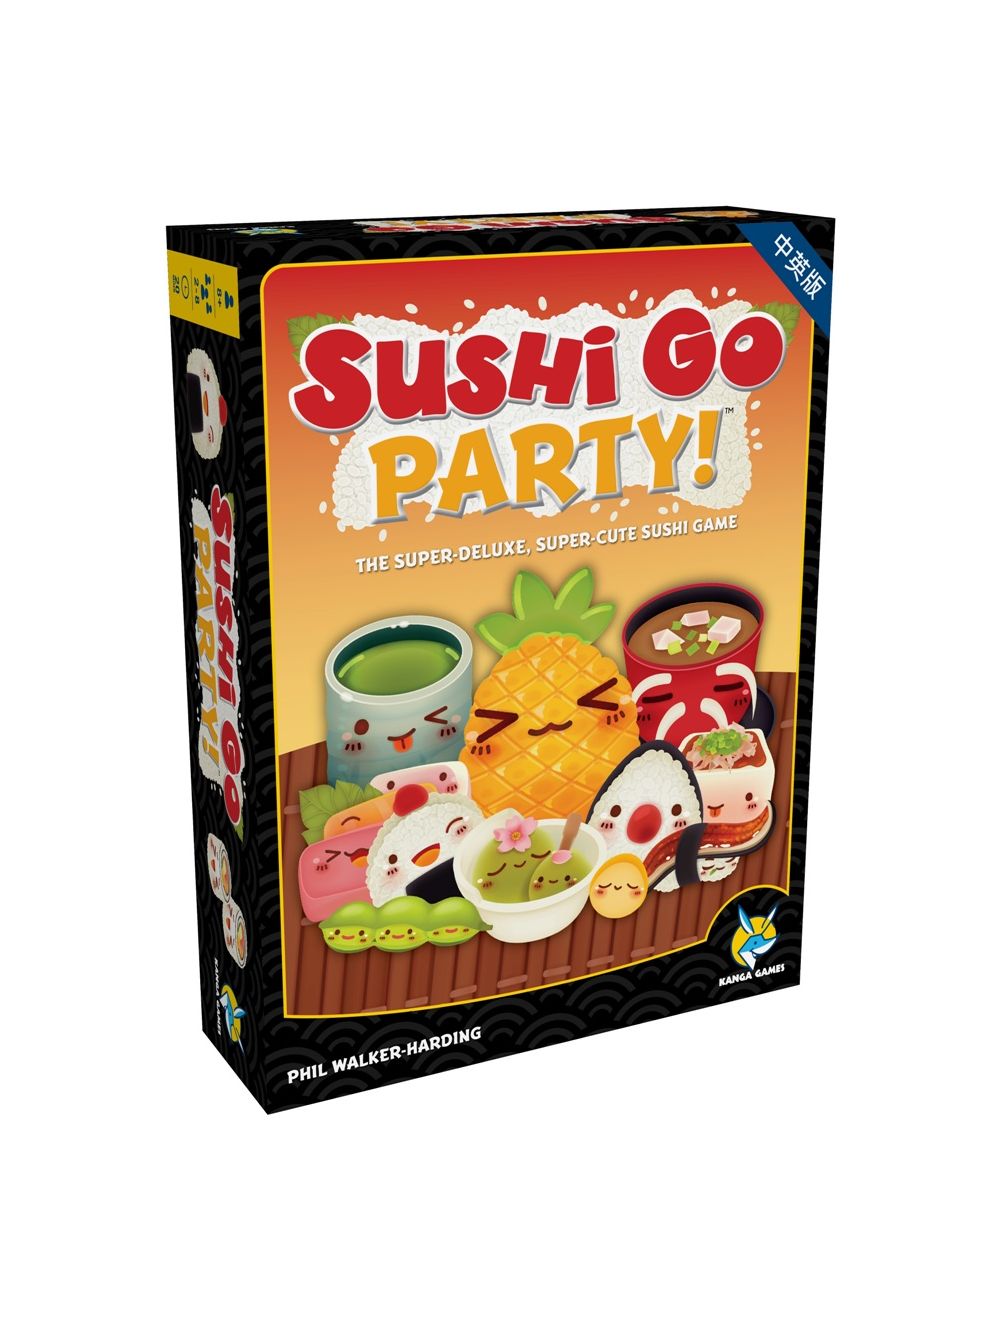 Sushi Go Party! 迴轉壽司-派對版